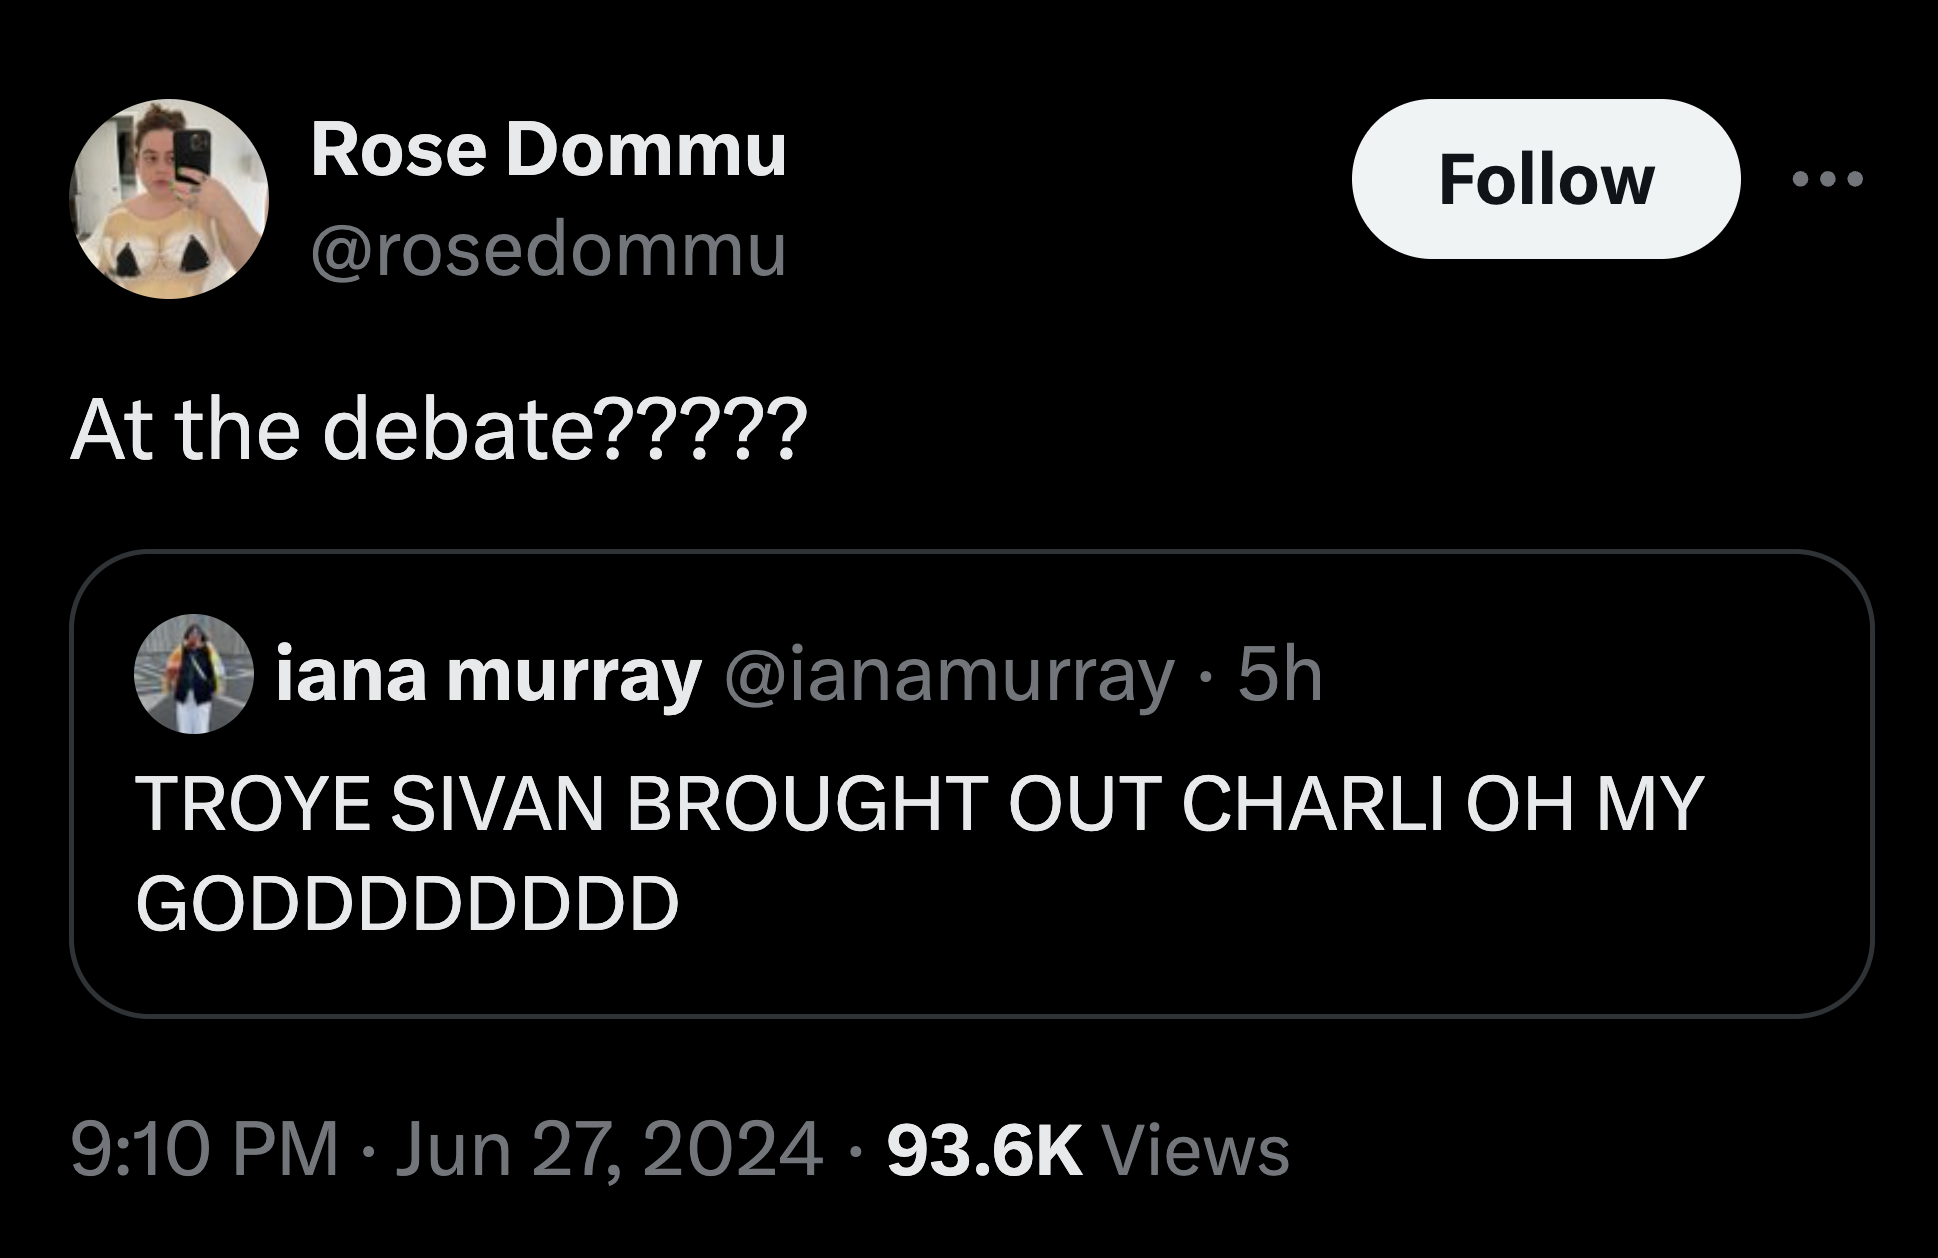 screenshot - Rose Dommu At the debate????? iana murray 5h Troye Sivan Brought Out Charli Oh My Godddddddd Views